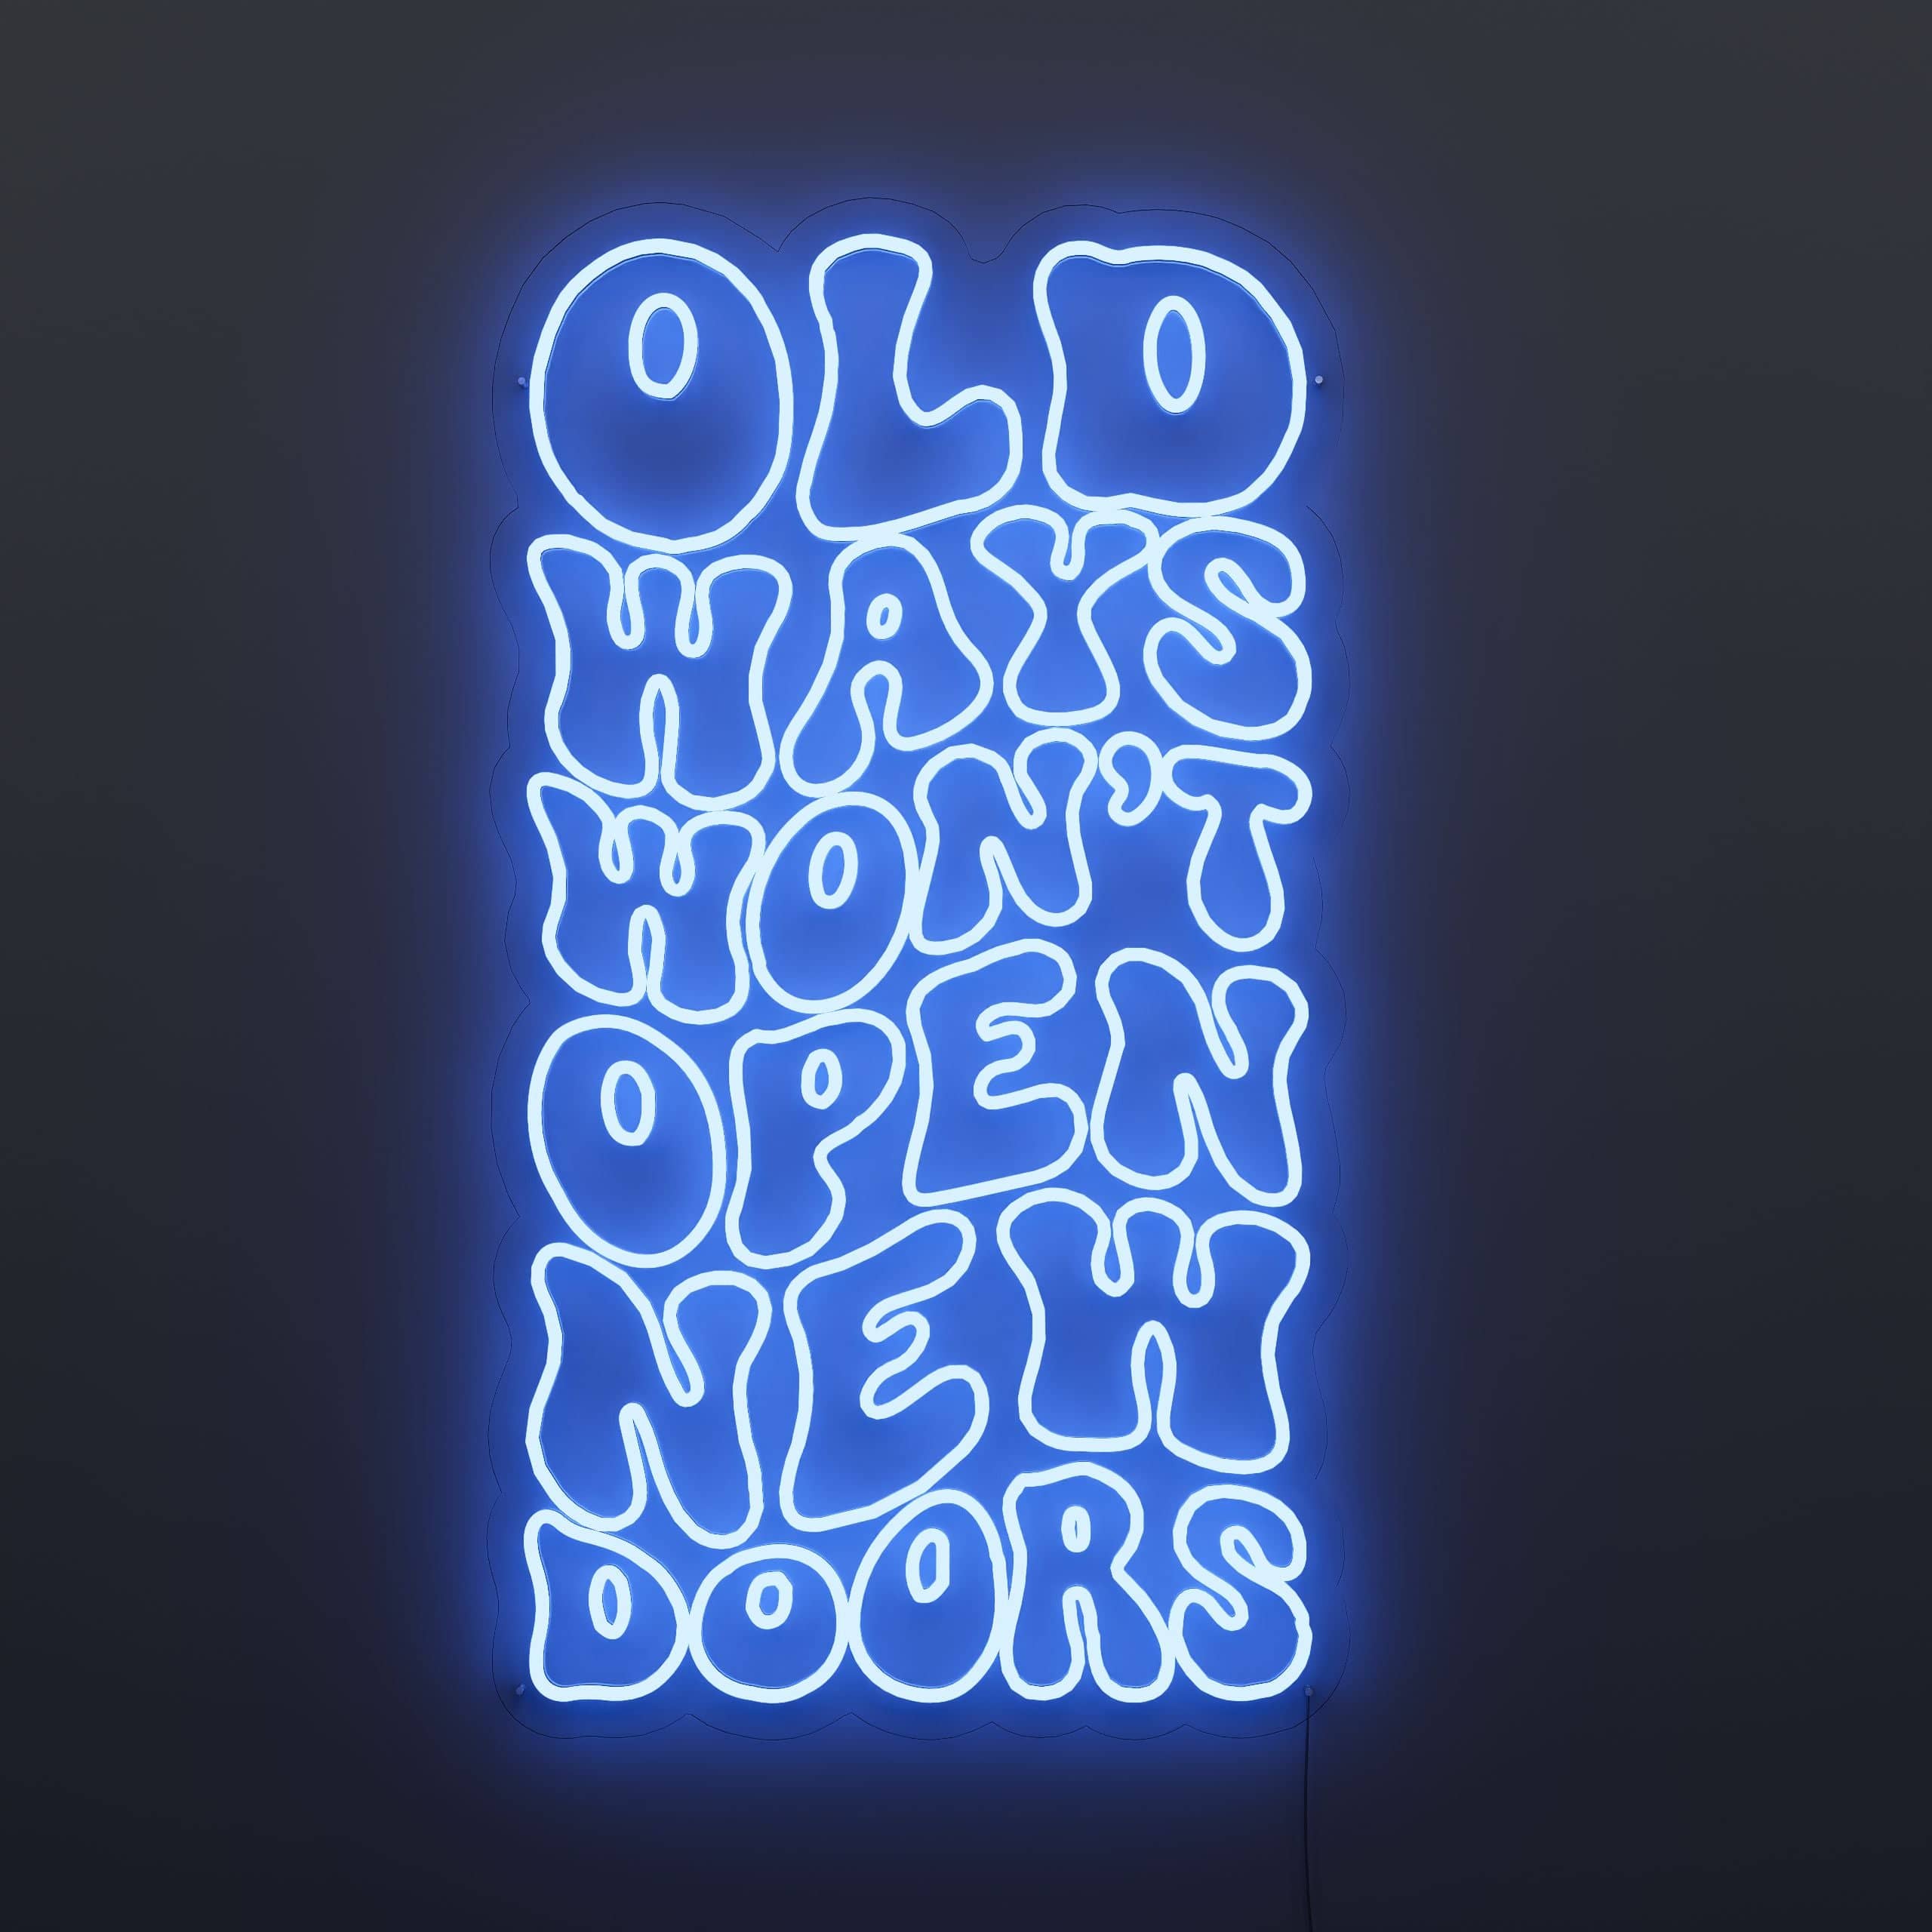 old-locks-need-new-keys-neon-sign-lite